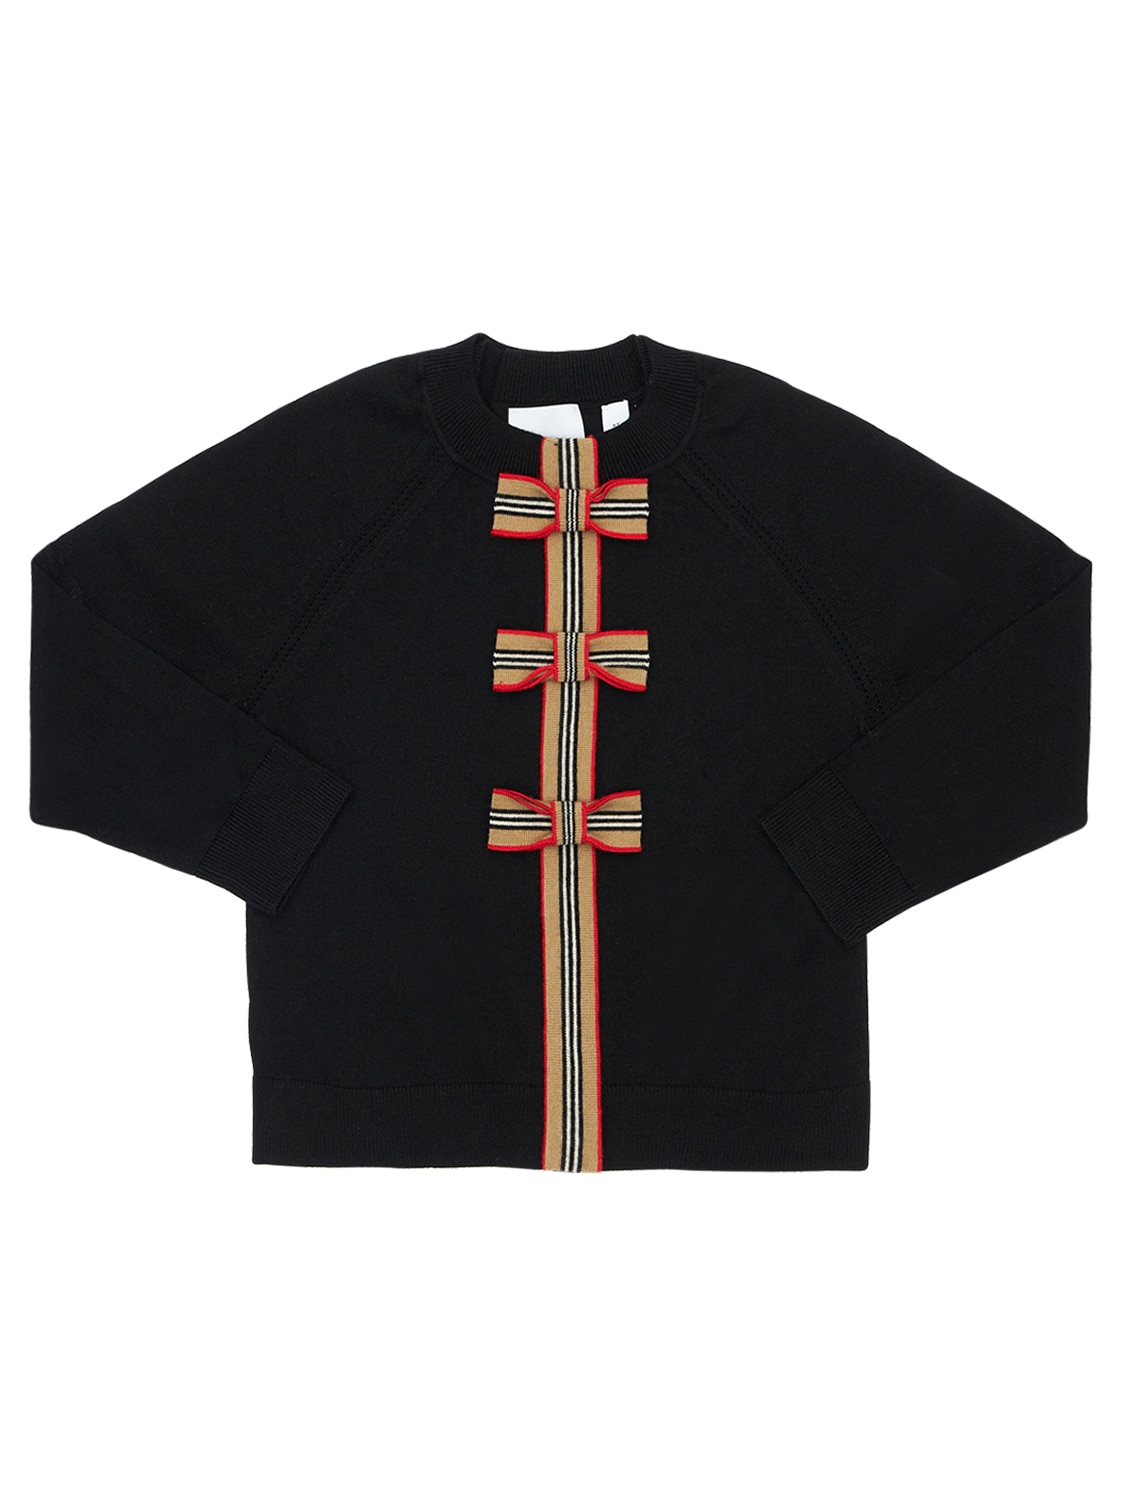 Burberry Kids' Wool Knit Sweater W/ Bows In Black